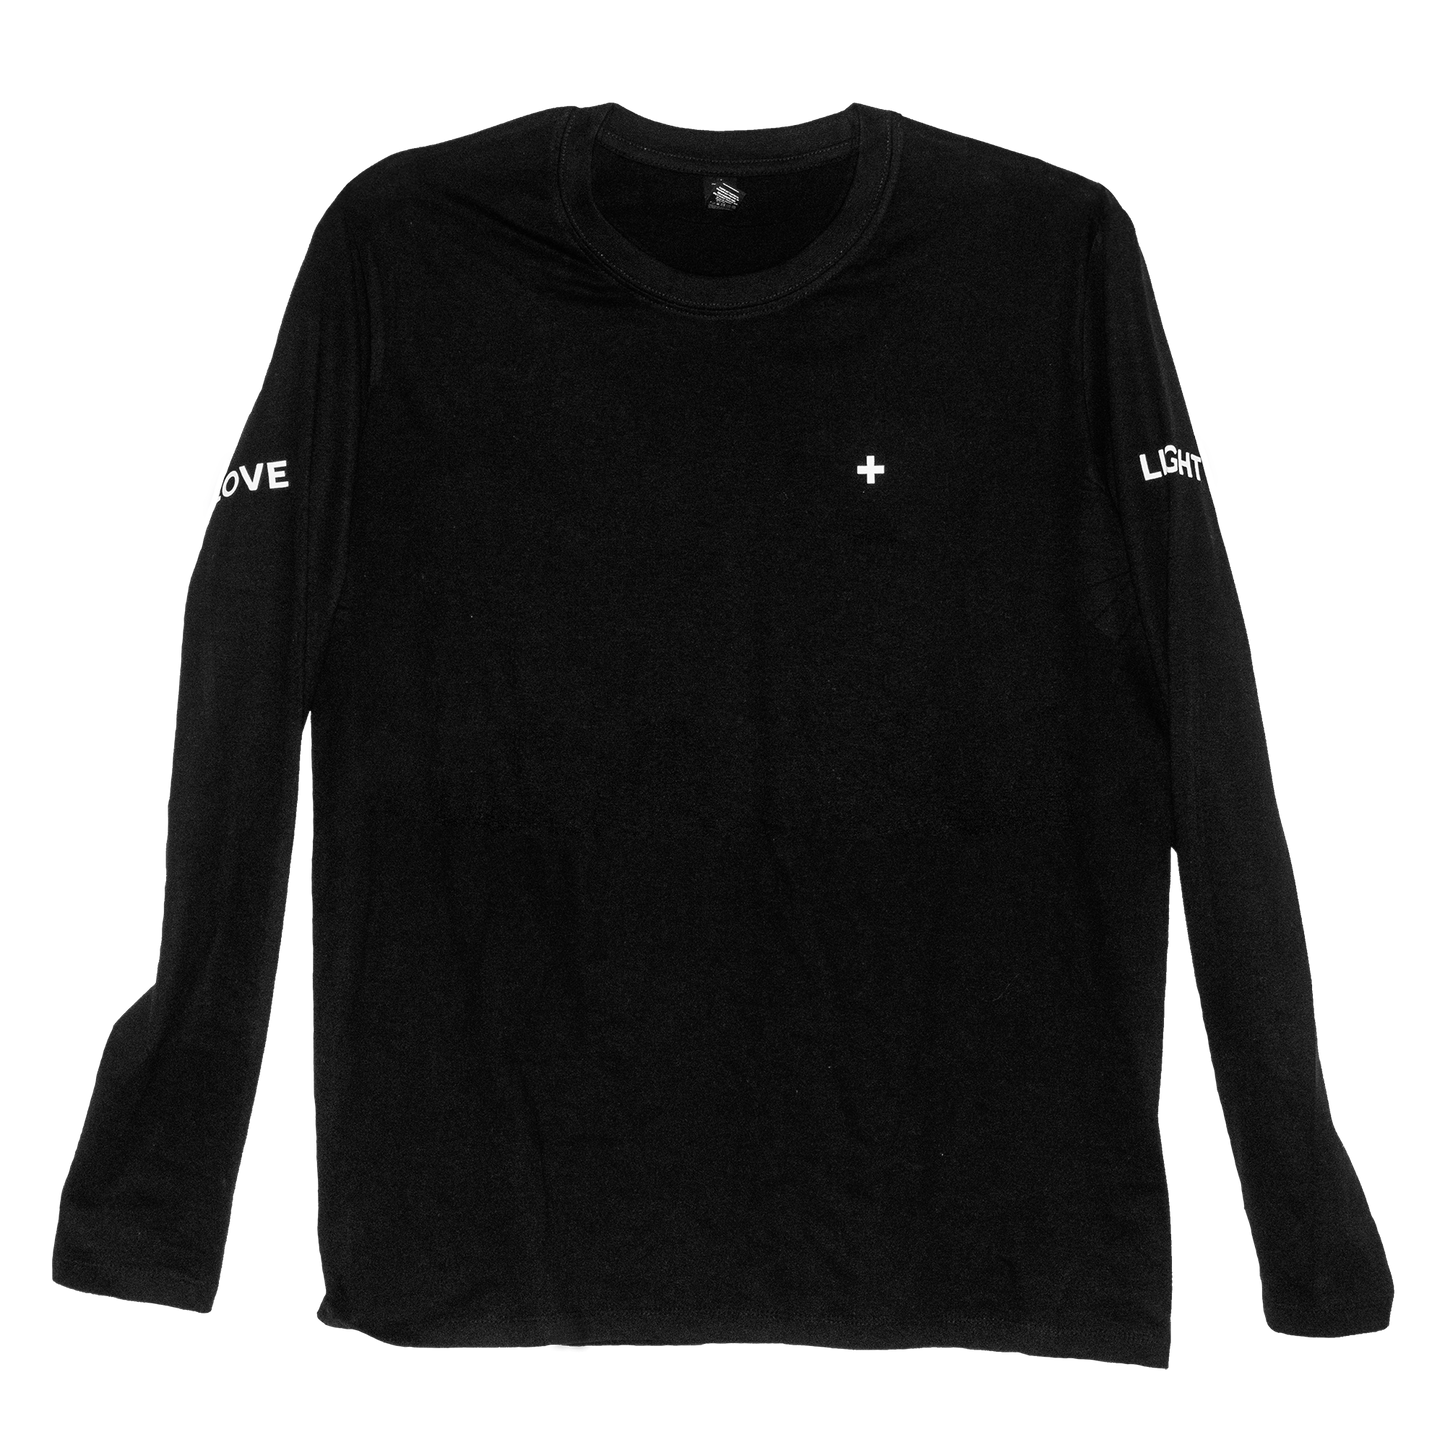 Daniel Avery 'Love + Light' Long Sleeve T-Shirt